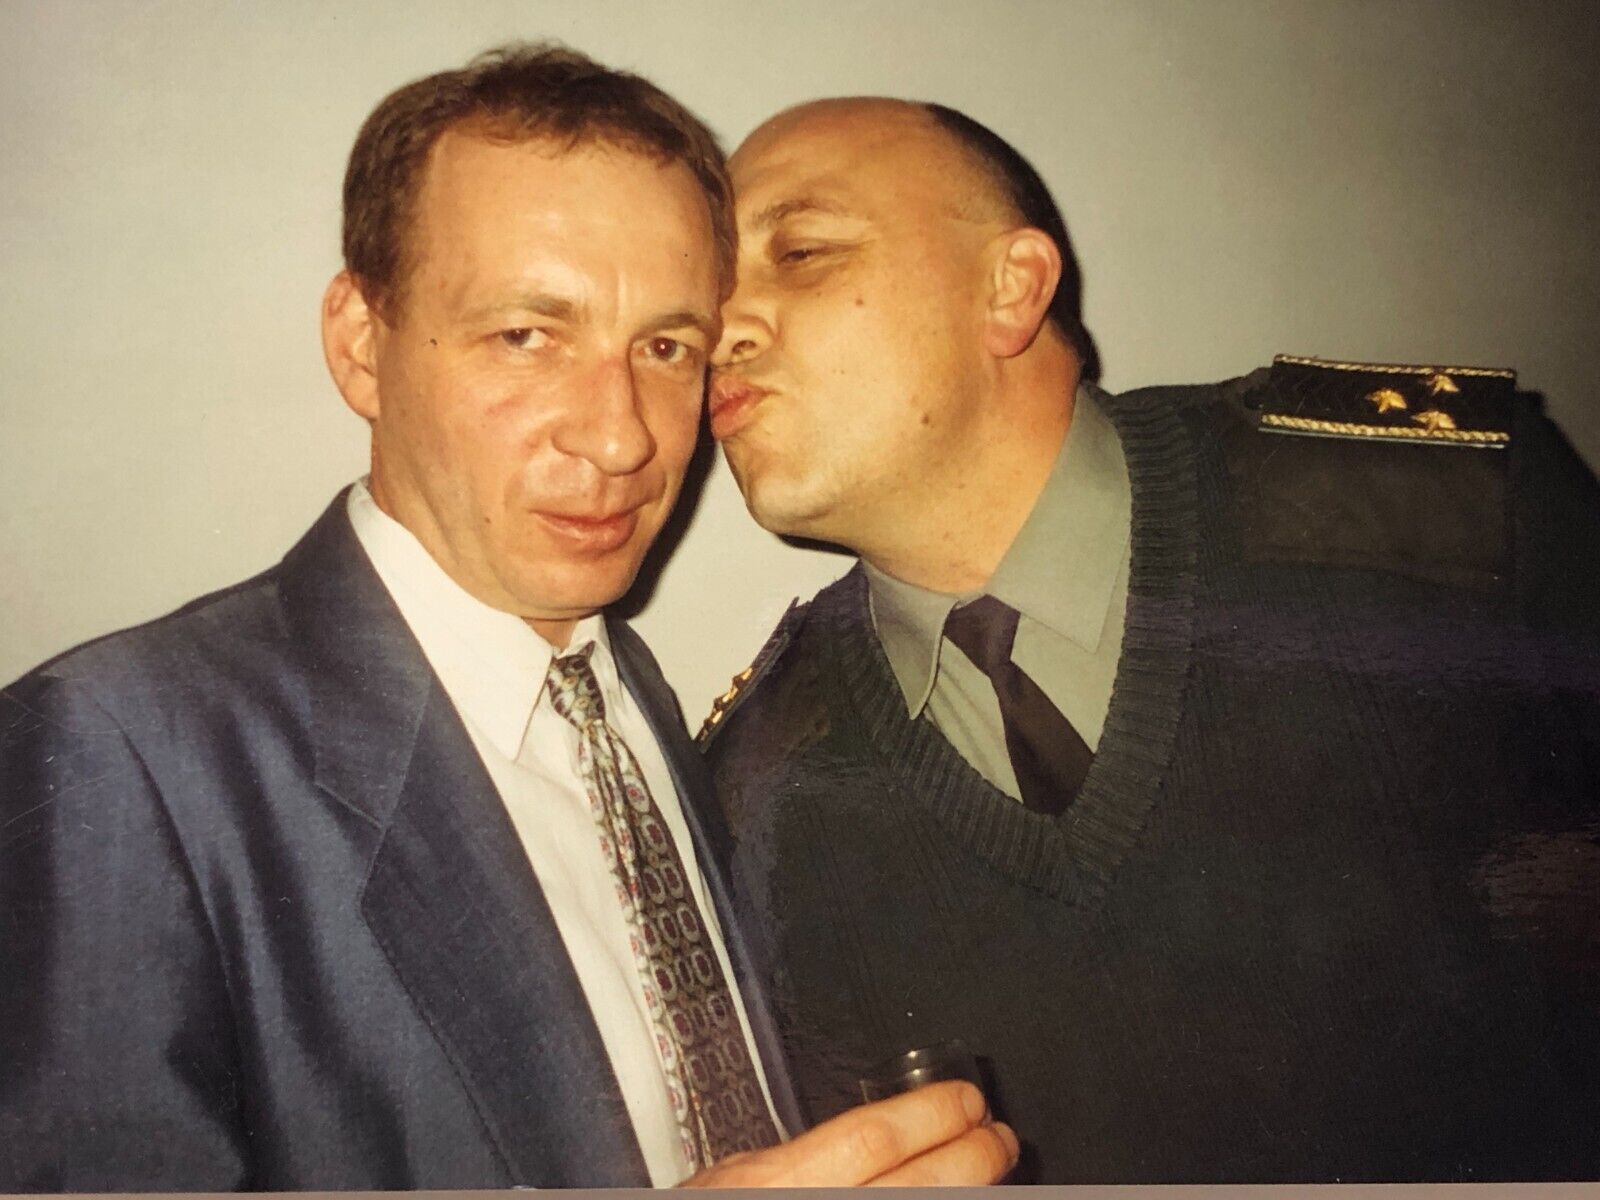 2005 Vintage Photo Affectionate Military Guys Men Gentle Kiss Gay int Portrait